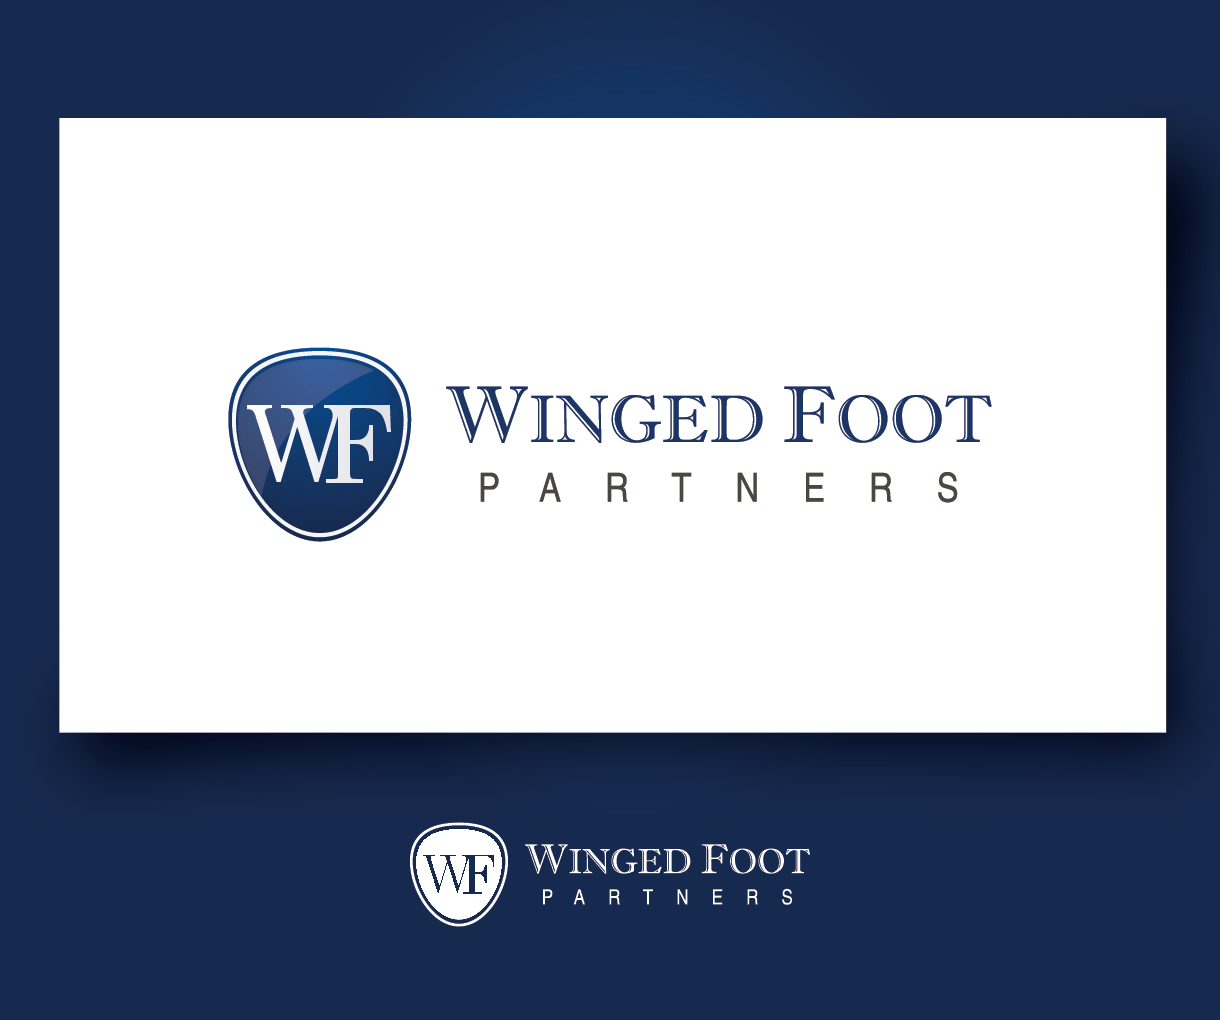 Blue Winged Foot Logo - Professional, Elegant, Business Logo Design for Winged Foot Partners ...